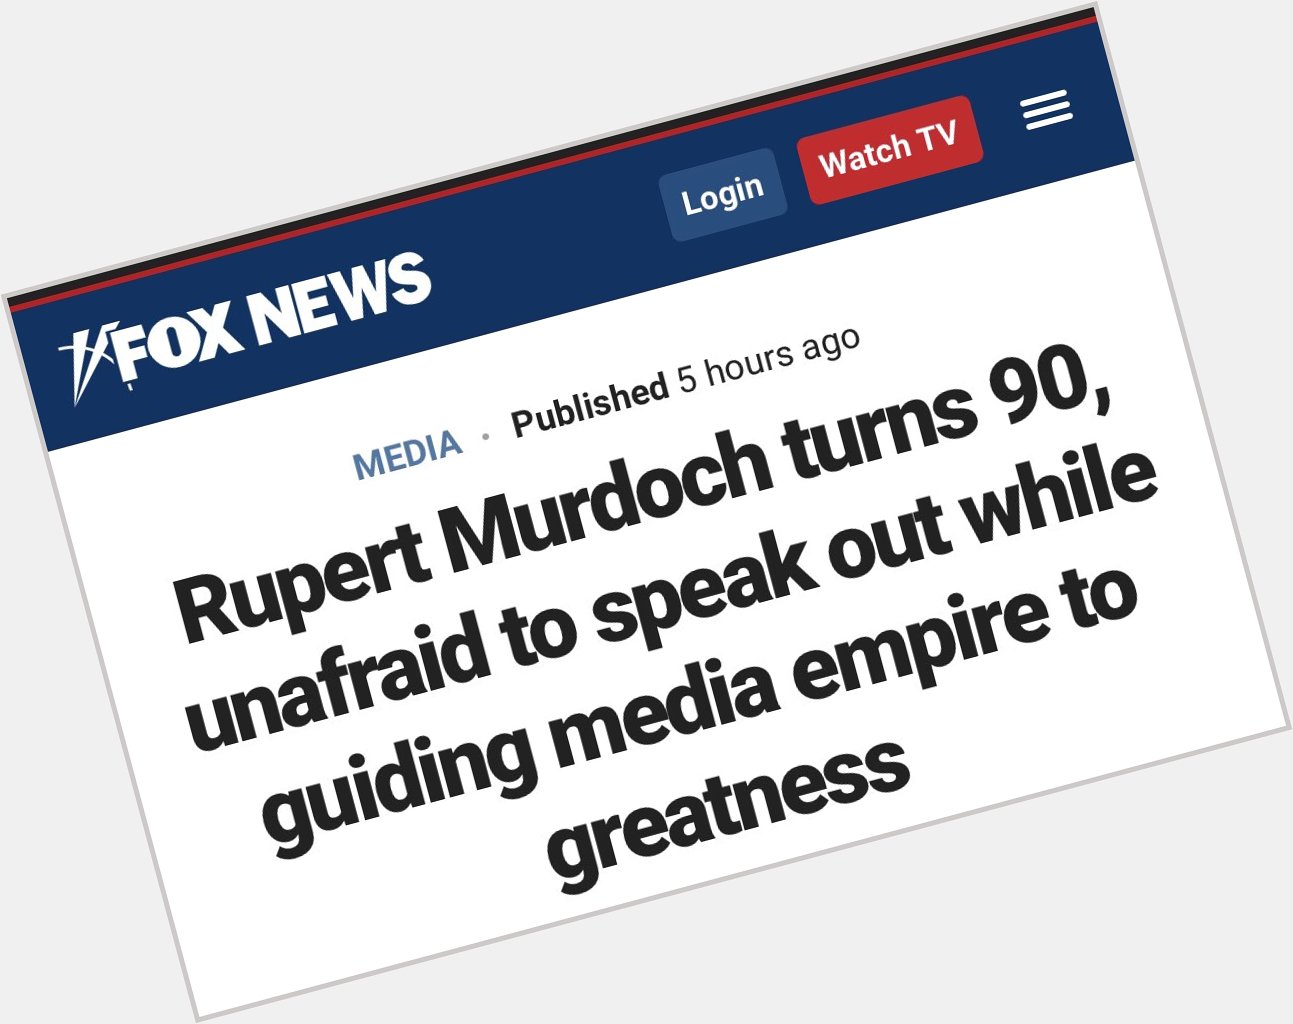 Fox News wishes Rupert Murdoch a happy birthday in the most Murdochy  way possible: 